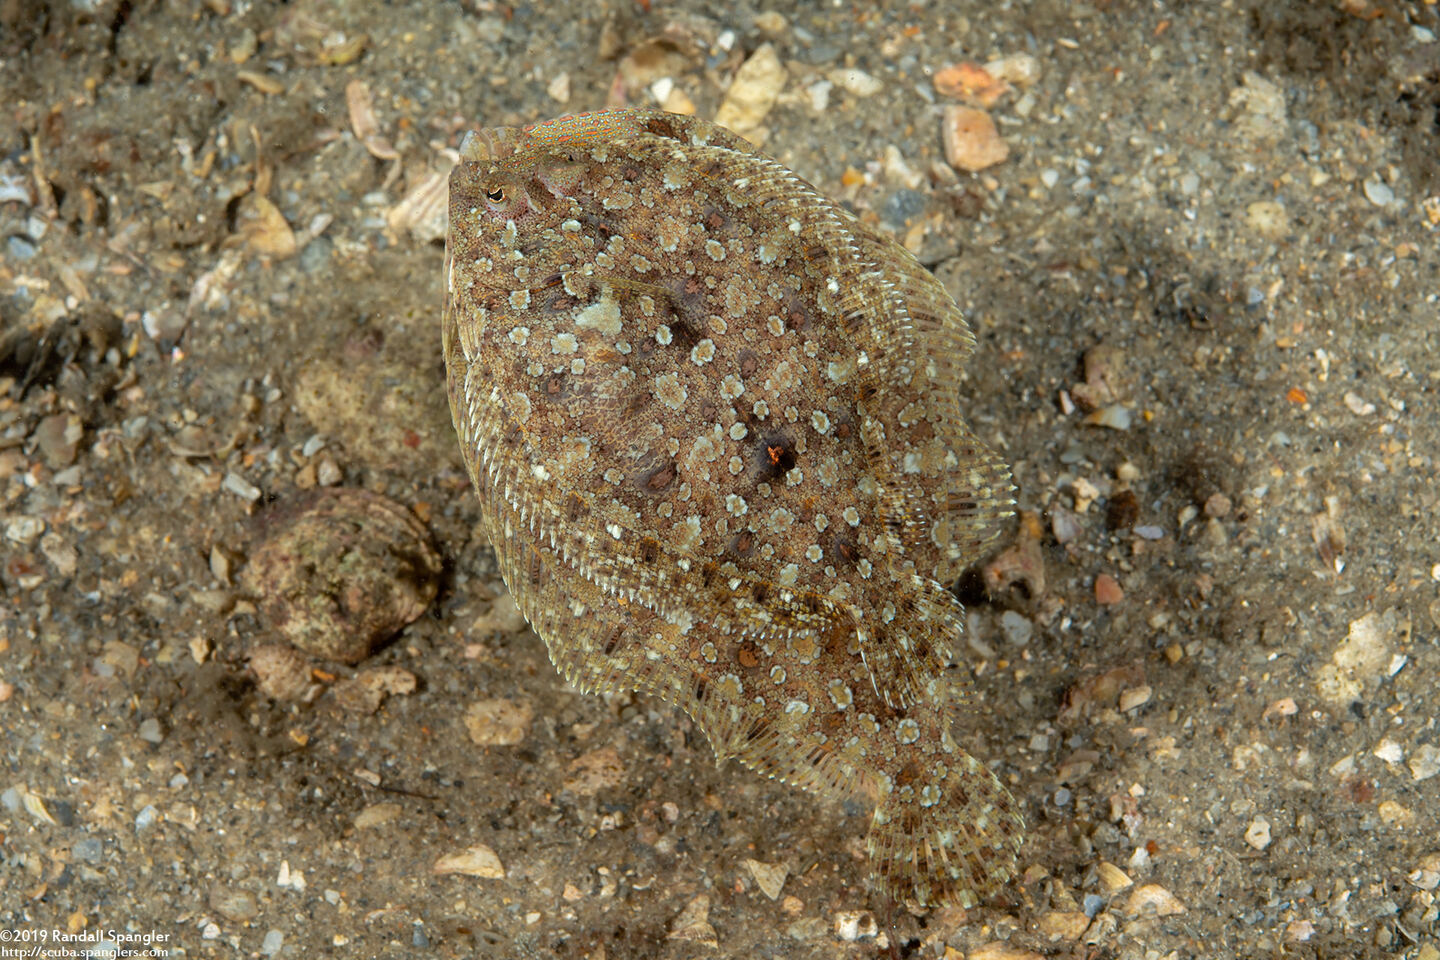 Bothus ocellatus (Eyed Flounder)